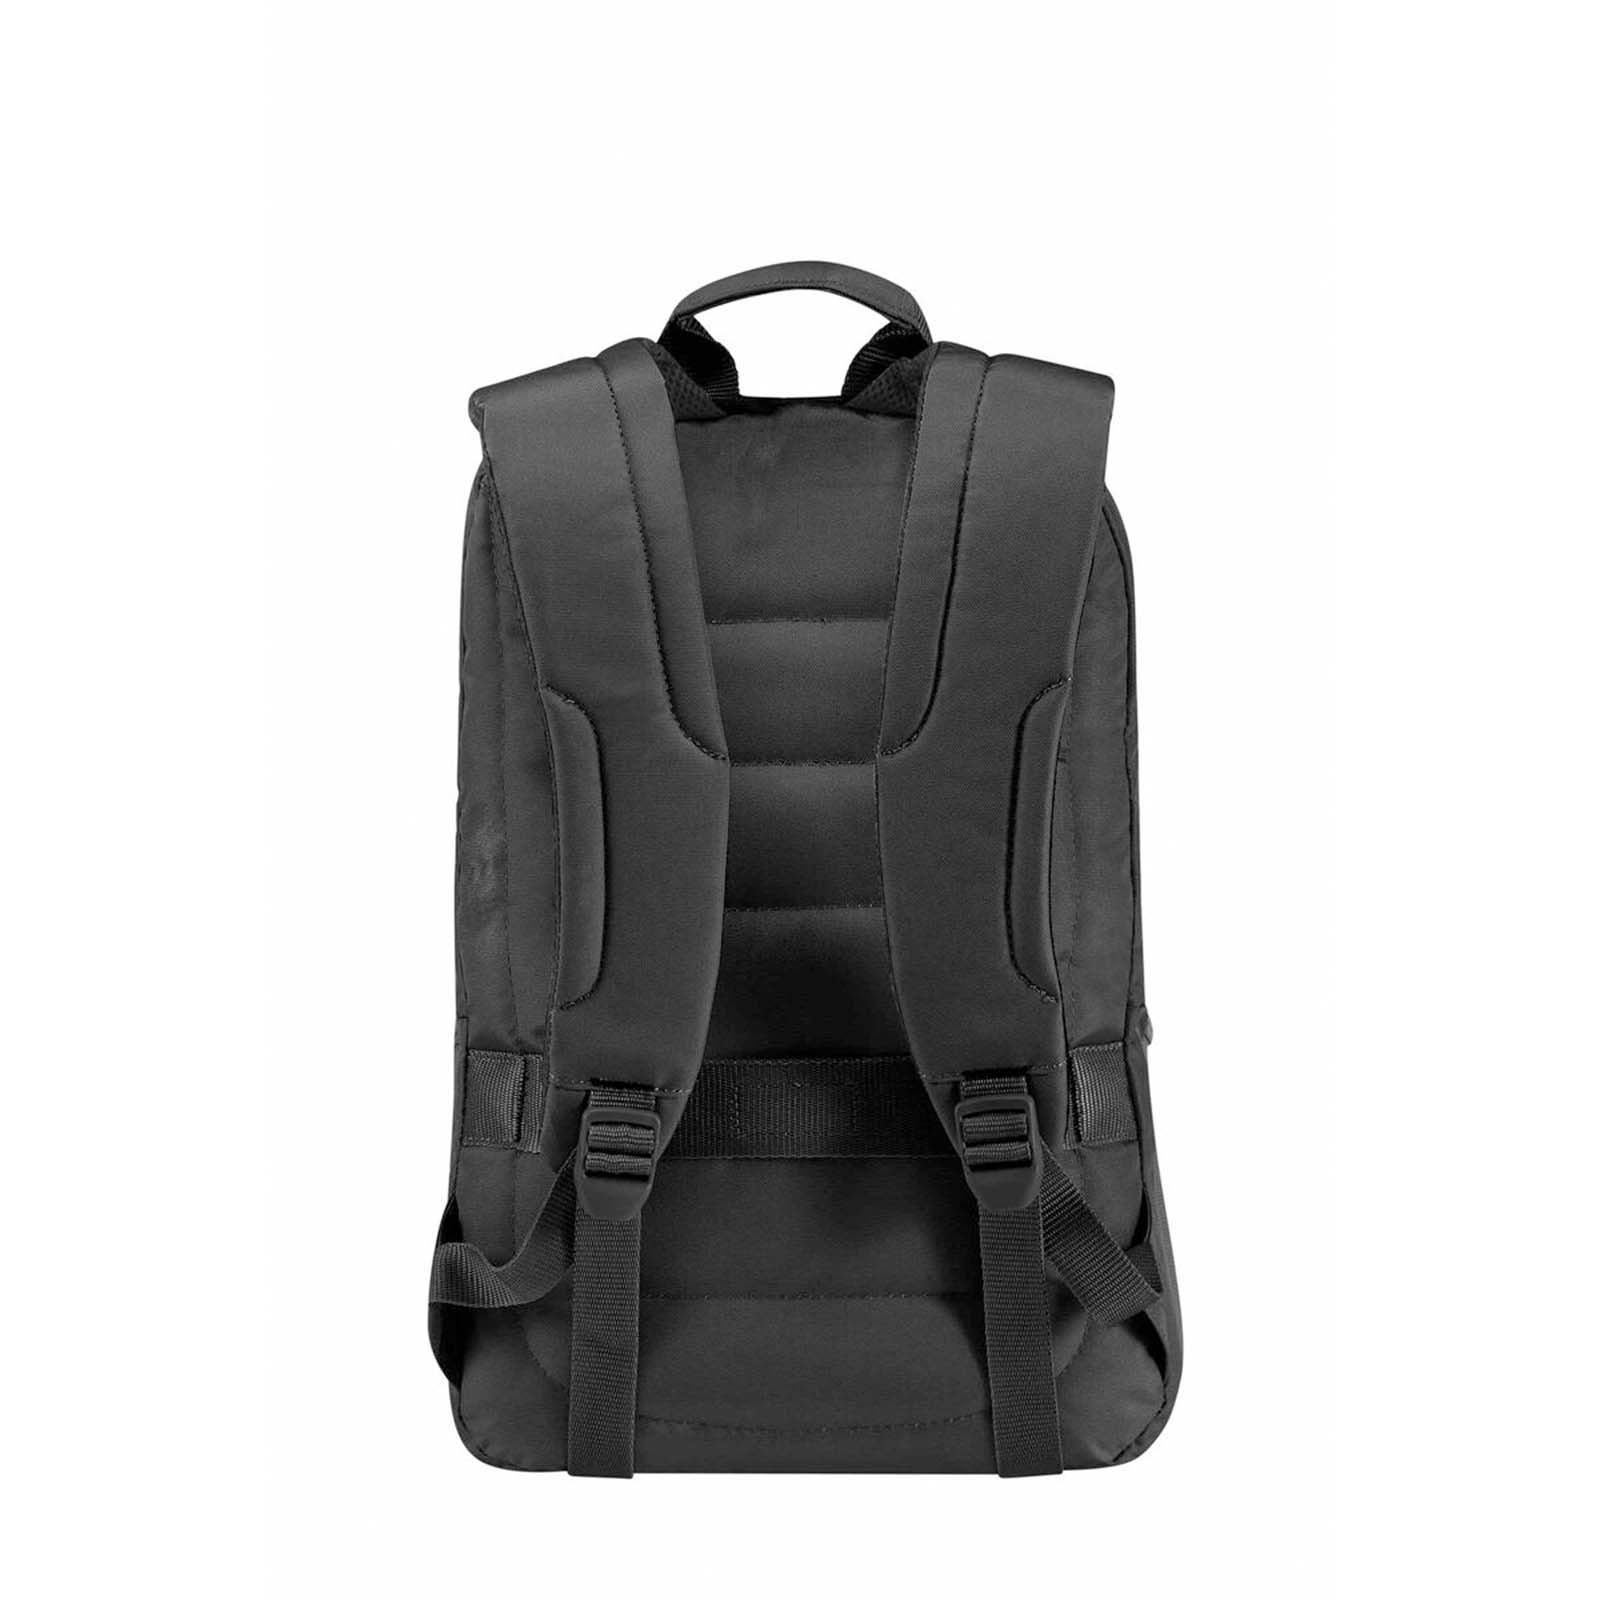 Samsonite-Guardit-Classy-15-Inch-Laptop-Backpack-Black-Harness